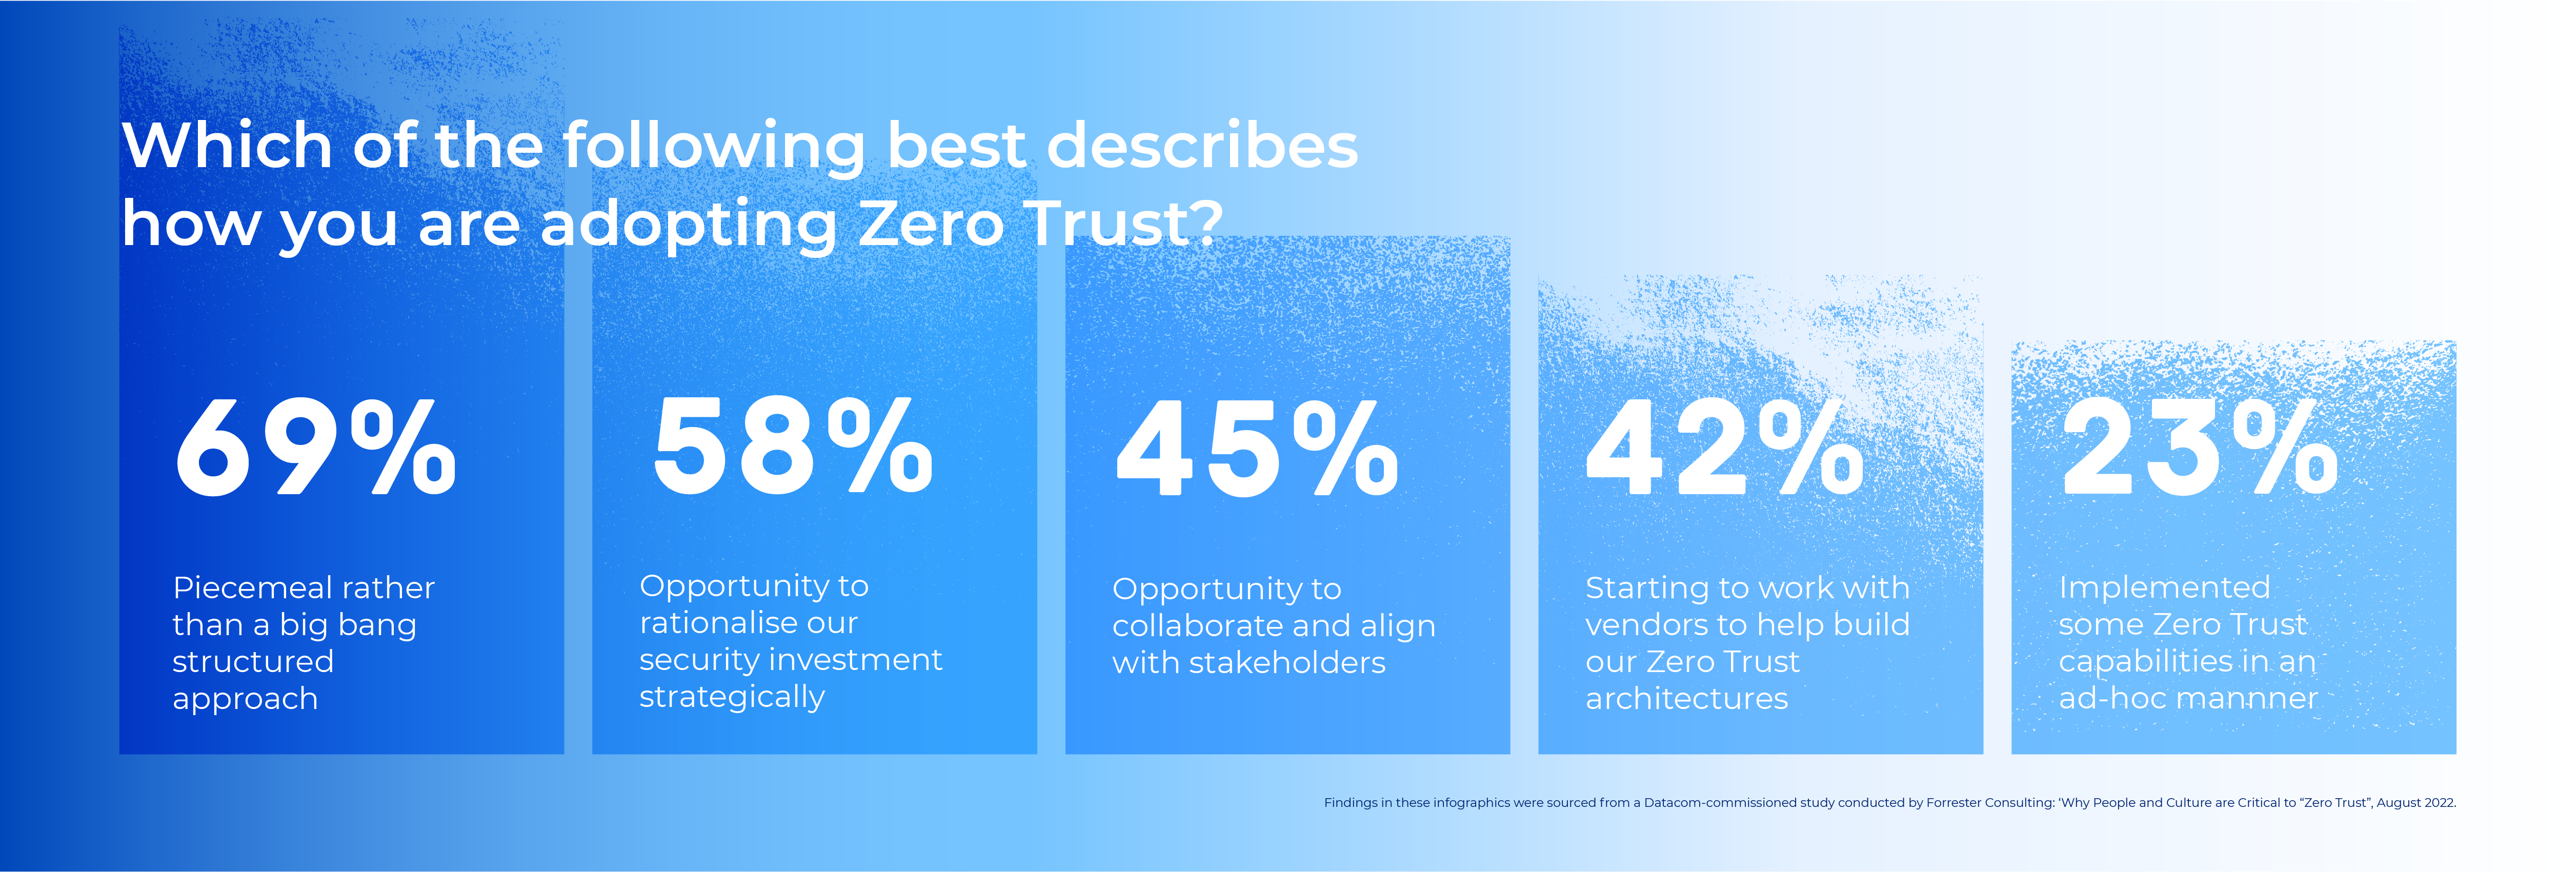 Infographic 4 detailing how companies are adopting Zero Trust